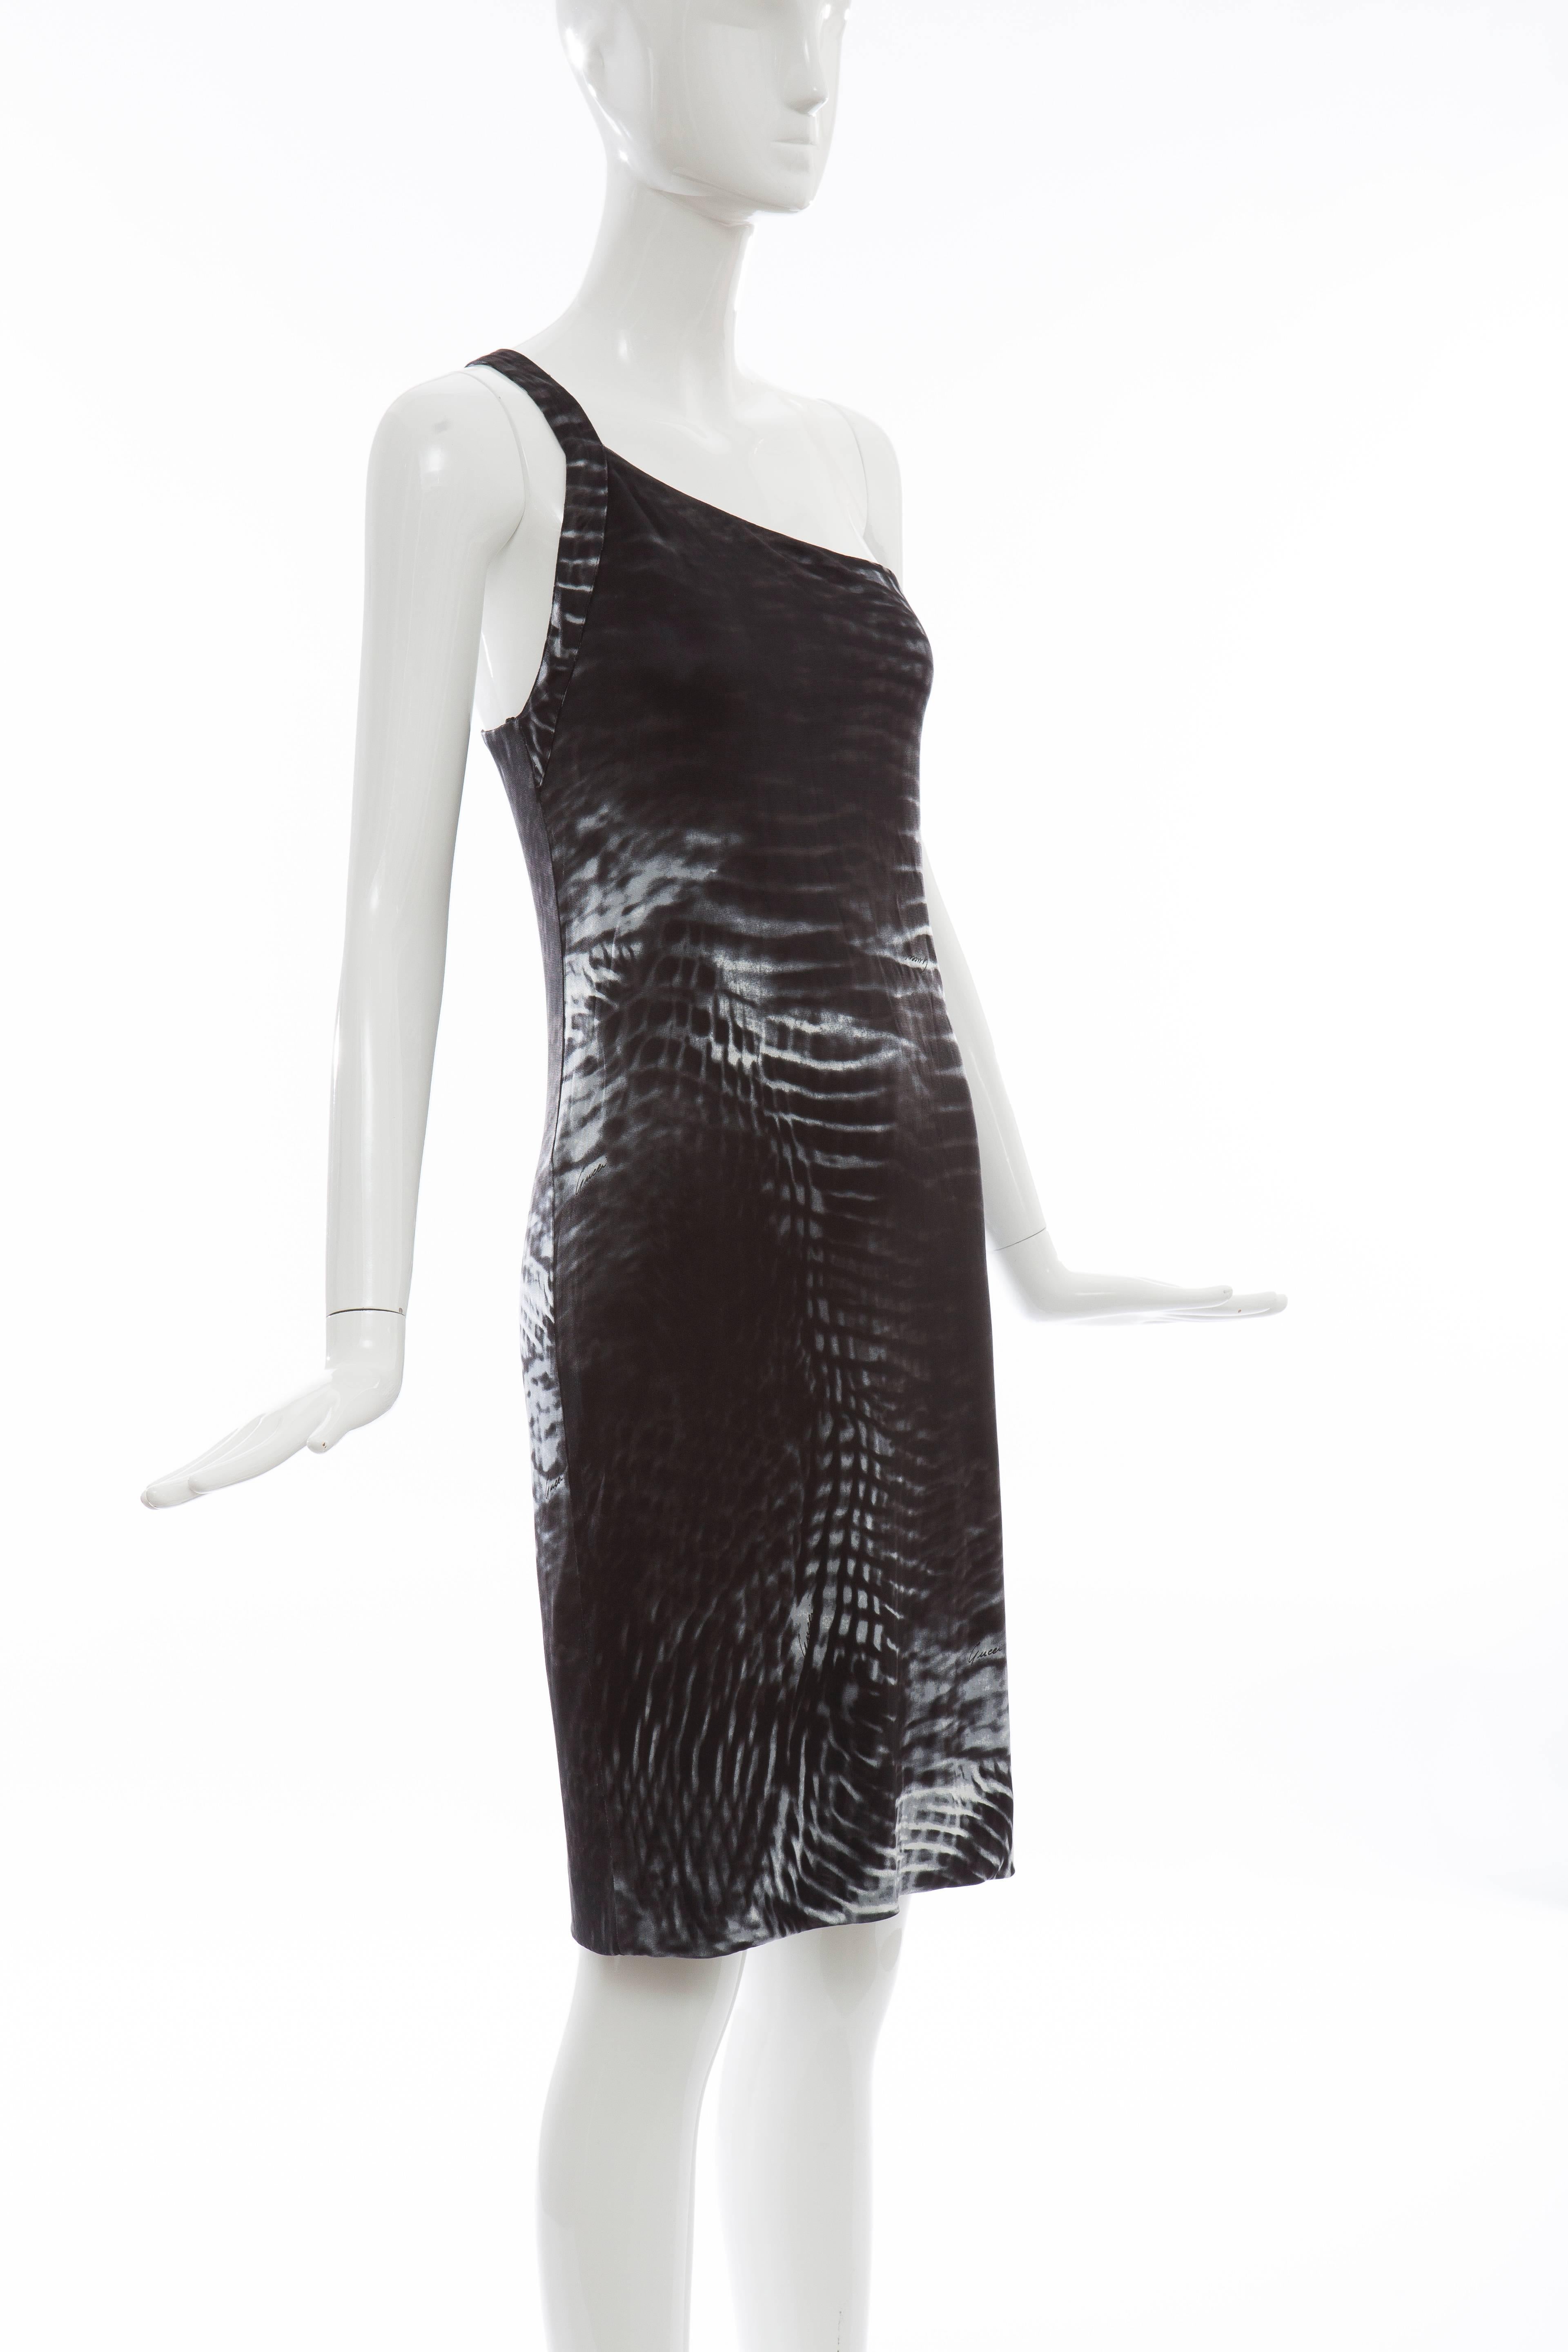 Tom Ford for Gucci Runway Black One-Shoulder Printed Dress , Spring 2000 For Sale 1